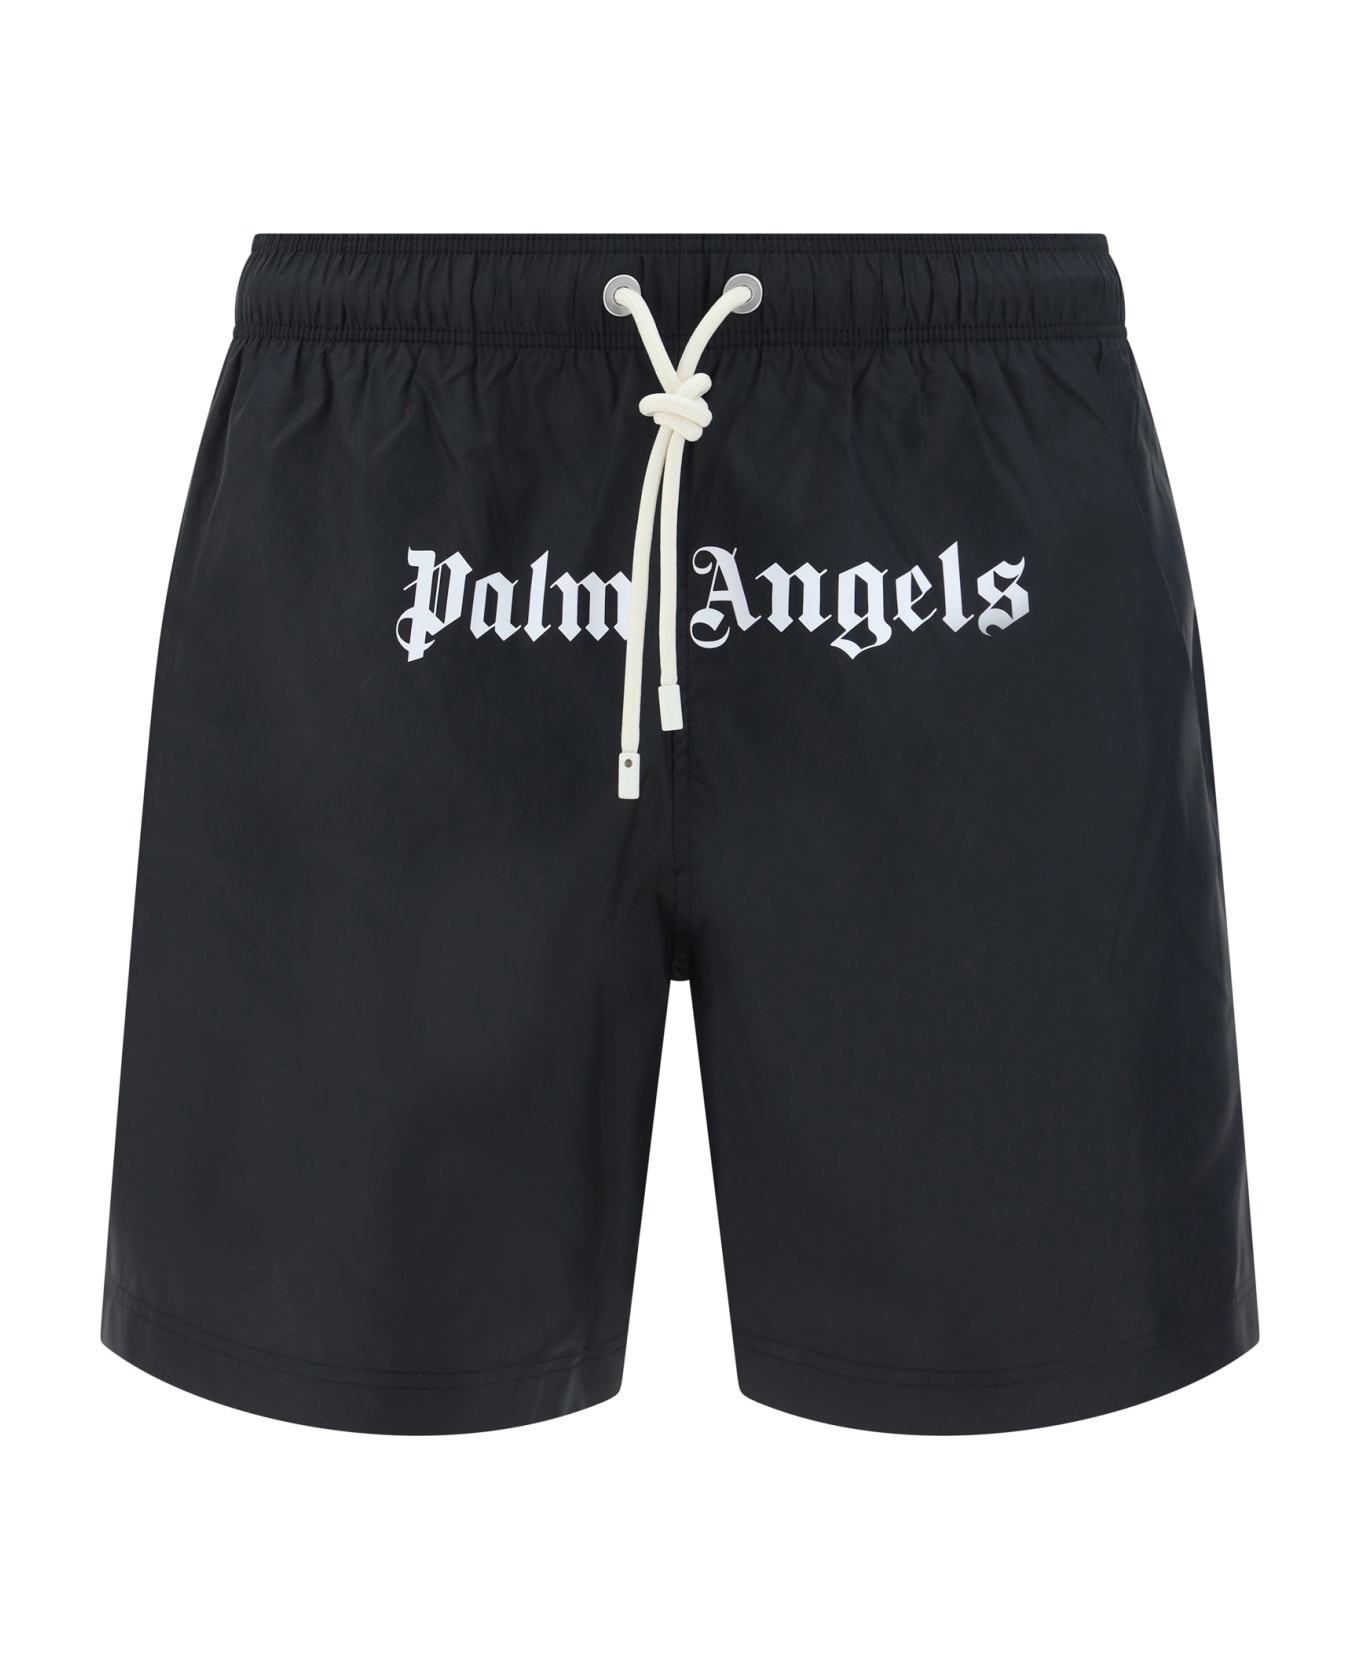 Palm Angels Swimshorts - Black/white